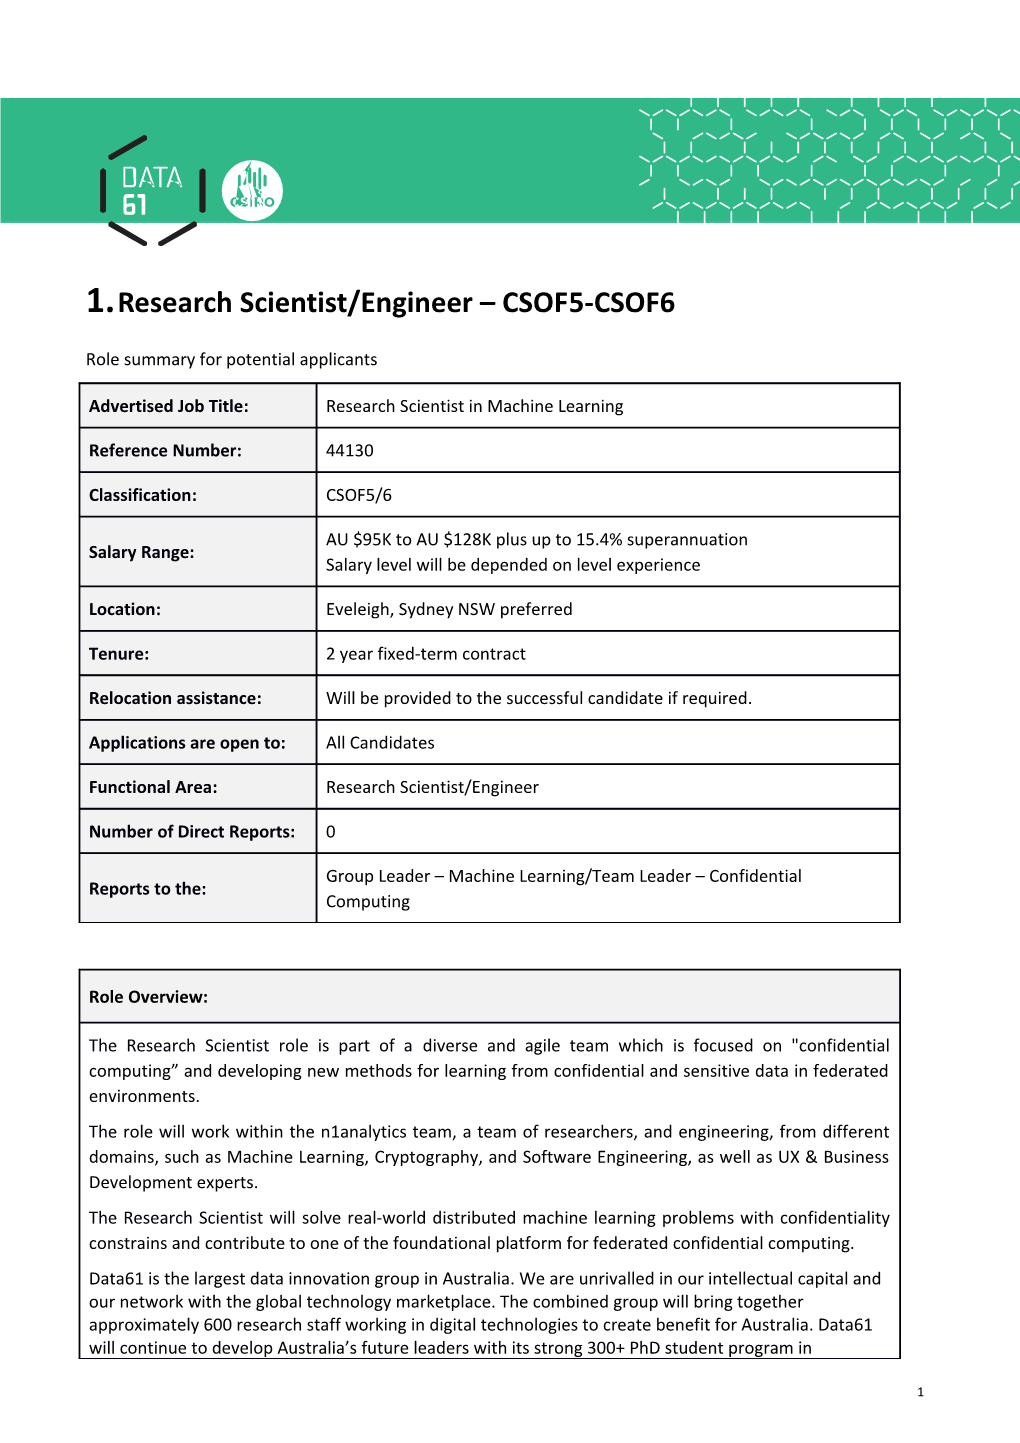 Research Scientist/Engineer CSOF5-CSOF6